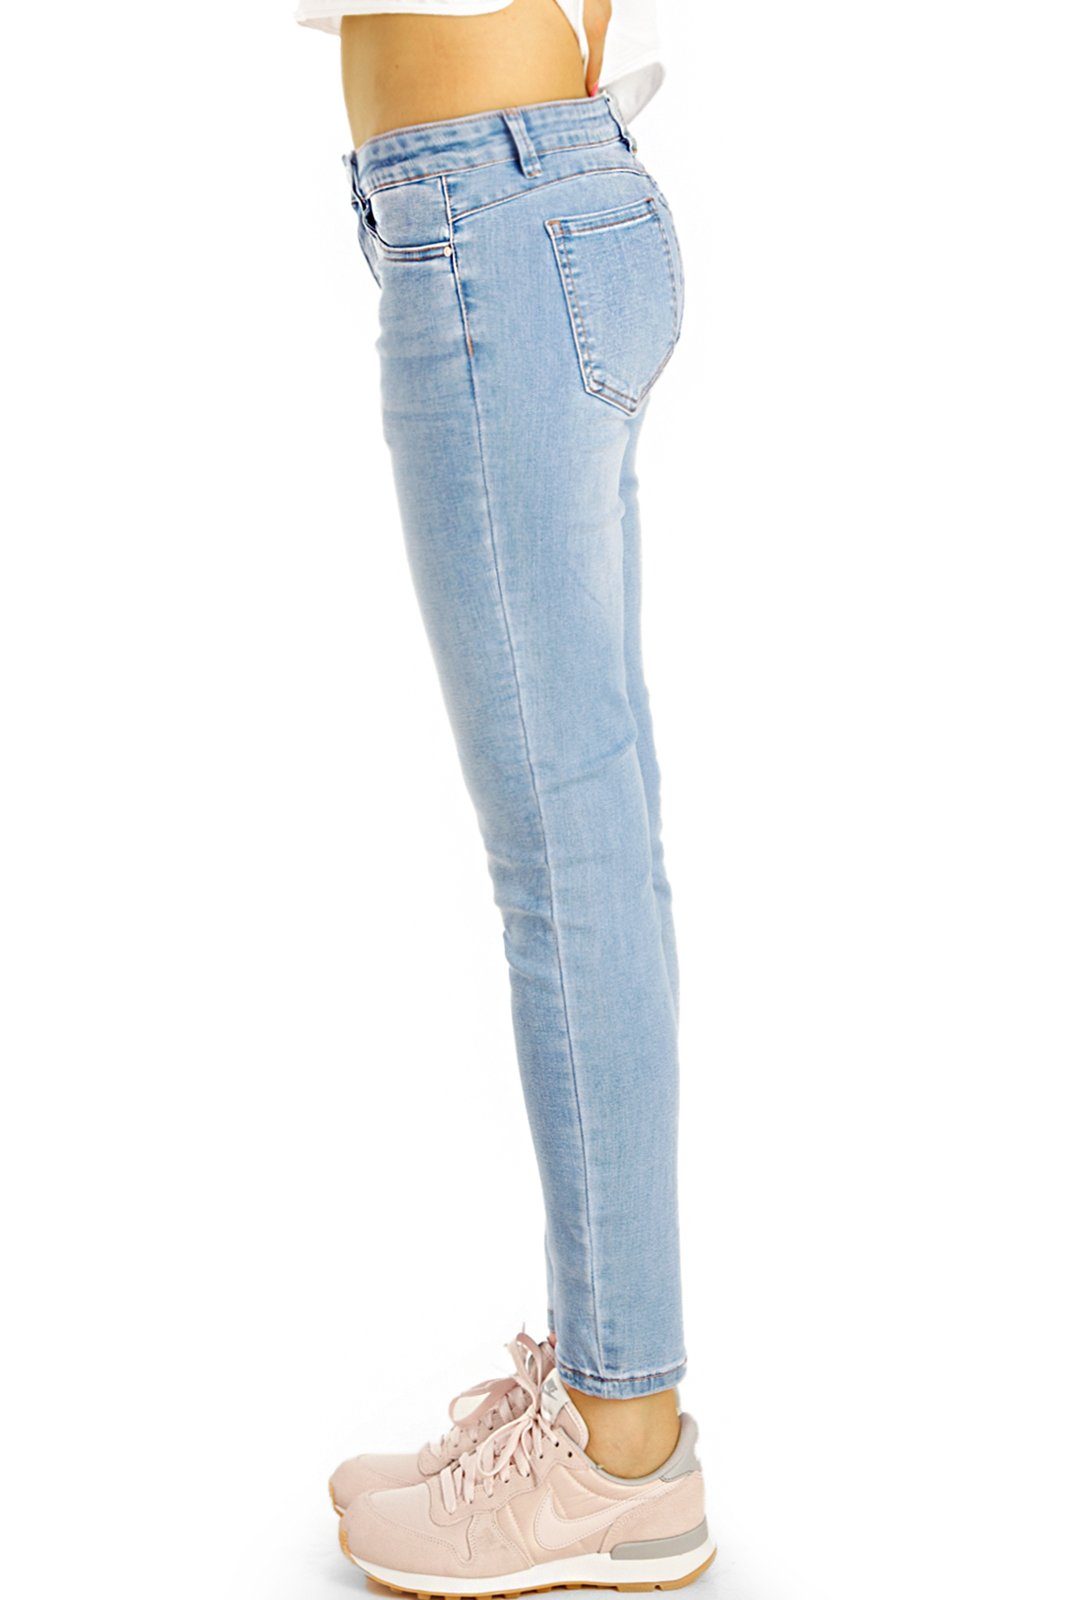 Hüftjeans Stretch-Anteil, - 5-Pocket-Style Hose j27p-1 Skinny be Low-rise-Jeans Damen- - Stretch slim styled Röhrenjeans hellblau mit